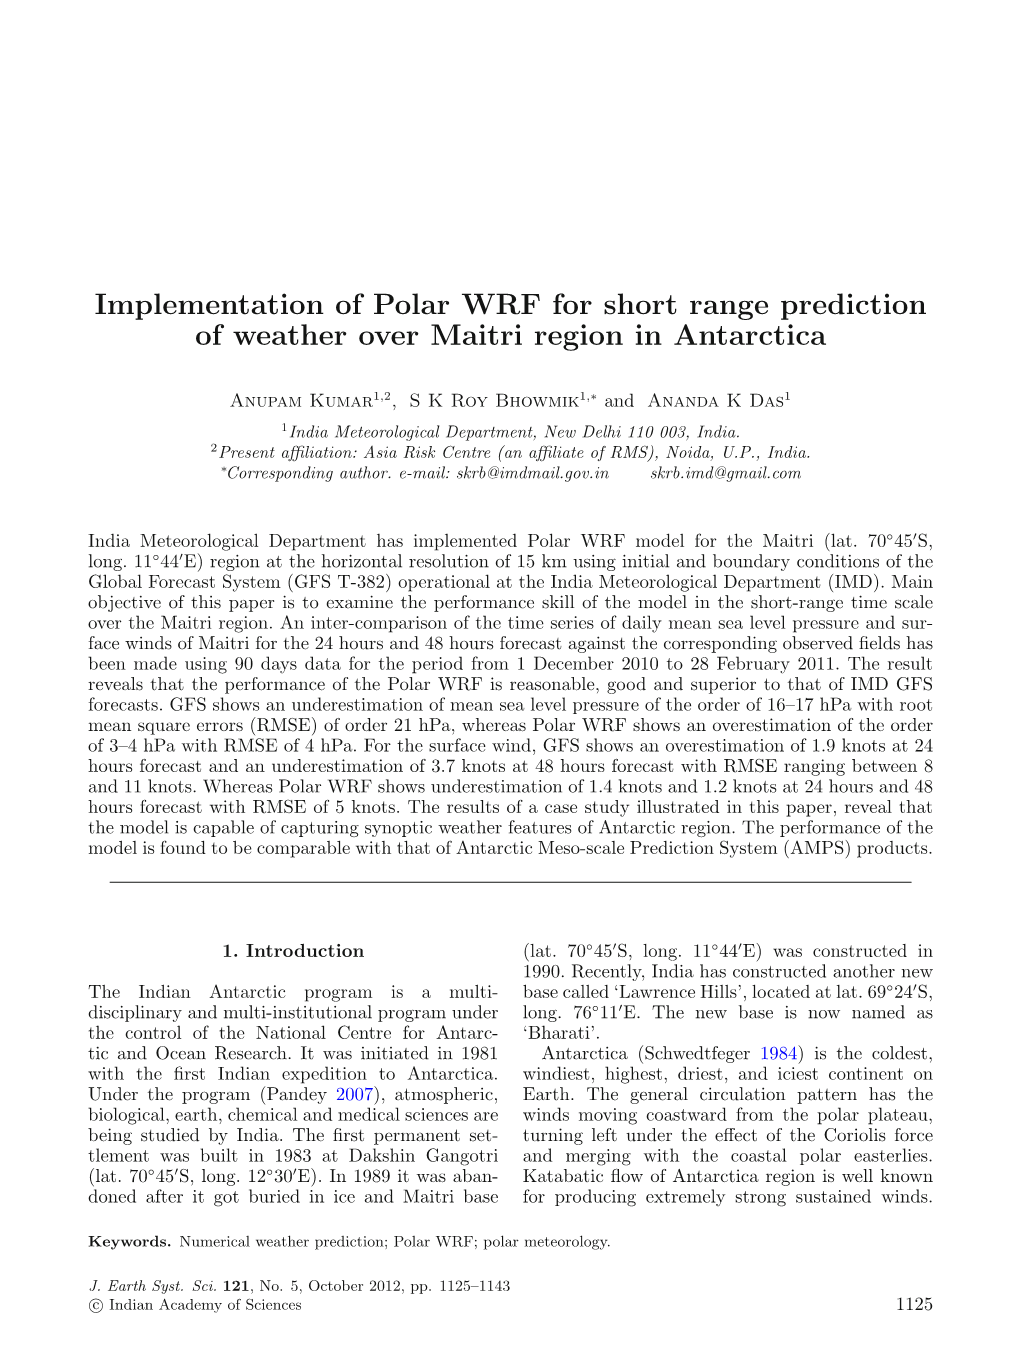 Implementation of Polar WRF for Short Range Prediction of Weather Over Maitri Region in Antarctica